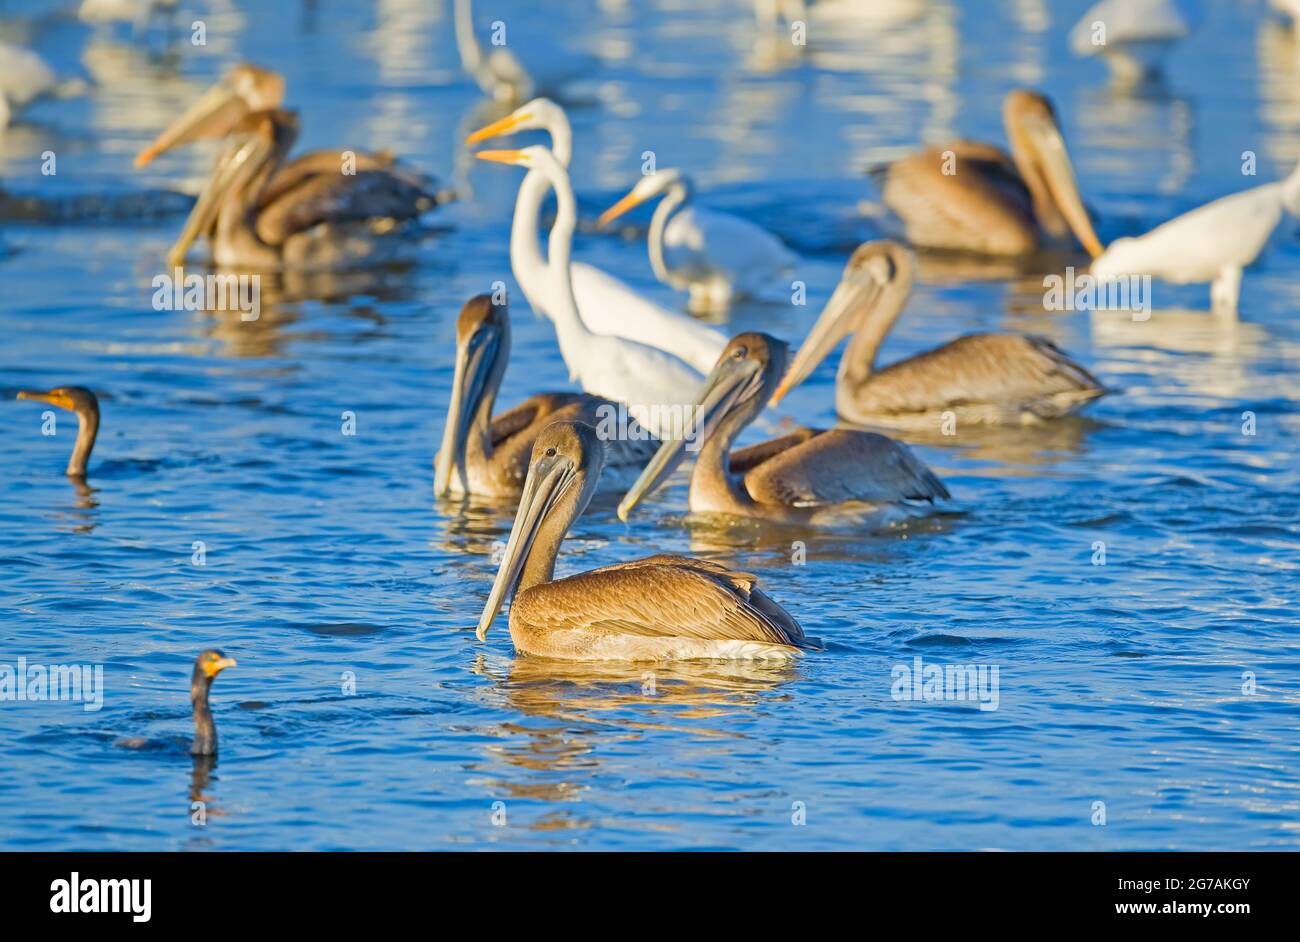 Group of Brown pelicans (Pelecanus occidentalis) and Great white egrets (Ardea alba) fishing, Sanibel Island, J.N. Ding Darling National Wildlife Refuge Florida, USA Stock Photo